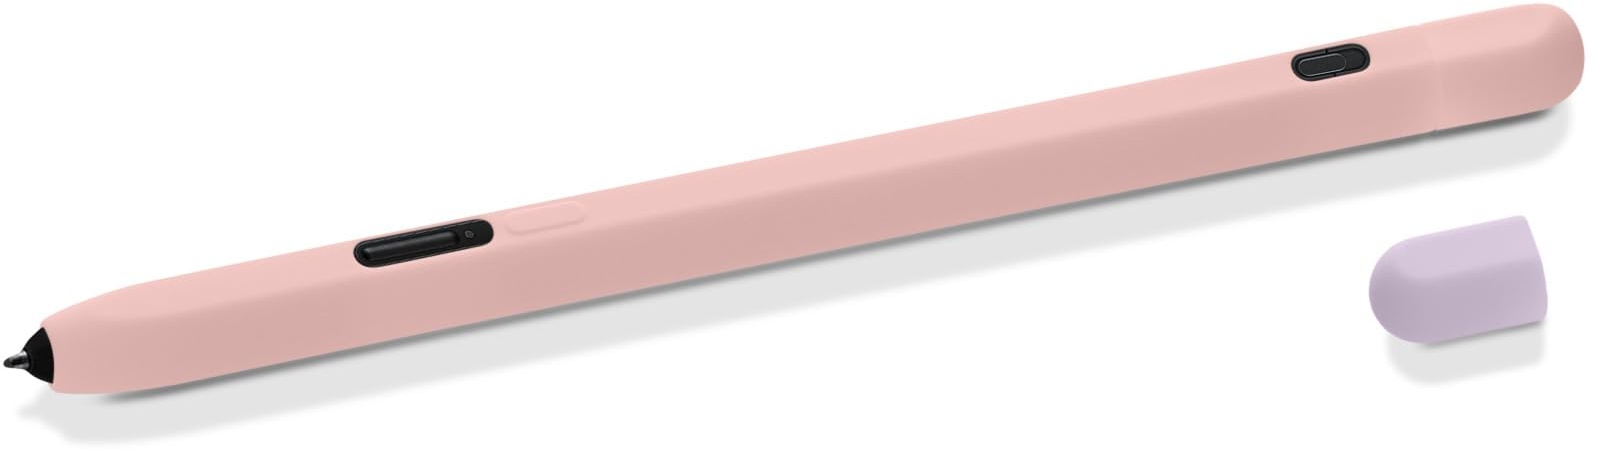 kwmobile Schutzhülle kompatibel mit Samsung S Pen Pro - Hülle Stift Silikon Case - Schutz Abdeckung Ladeanschluss - Altrosa